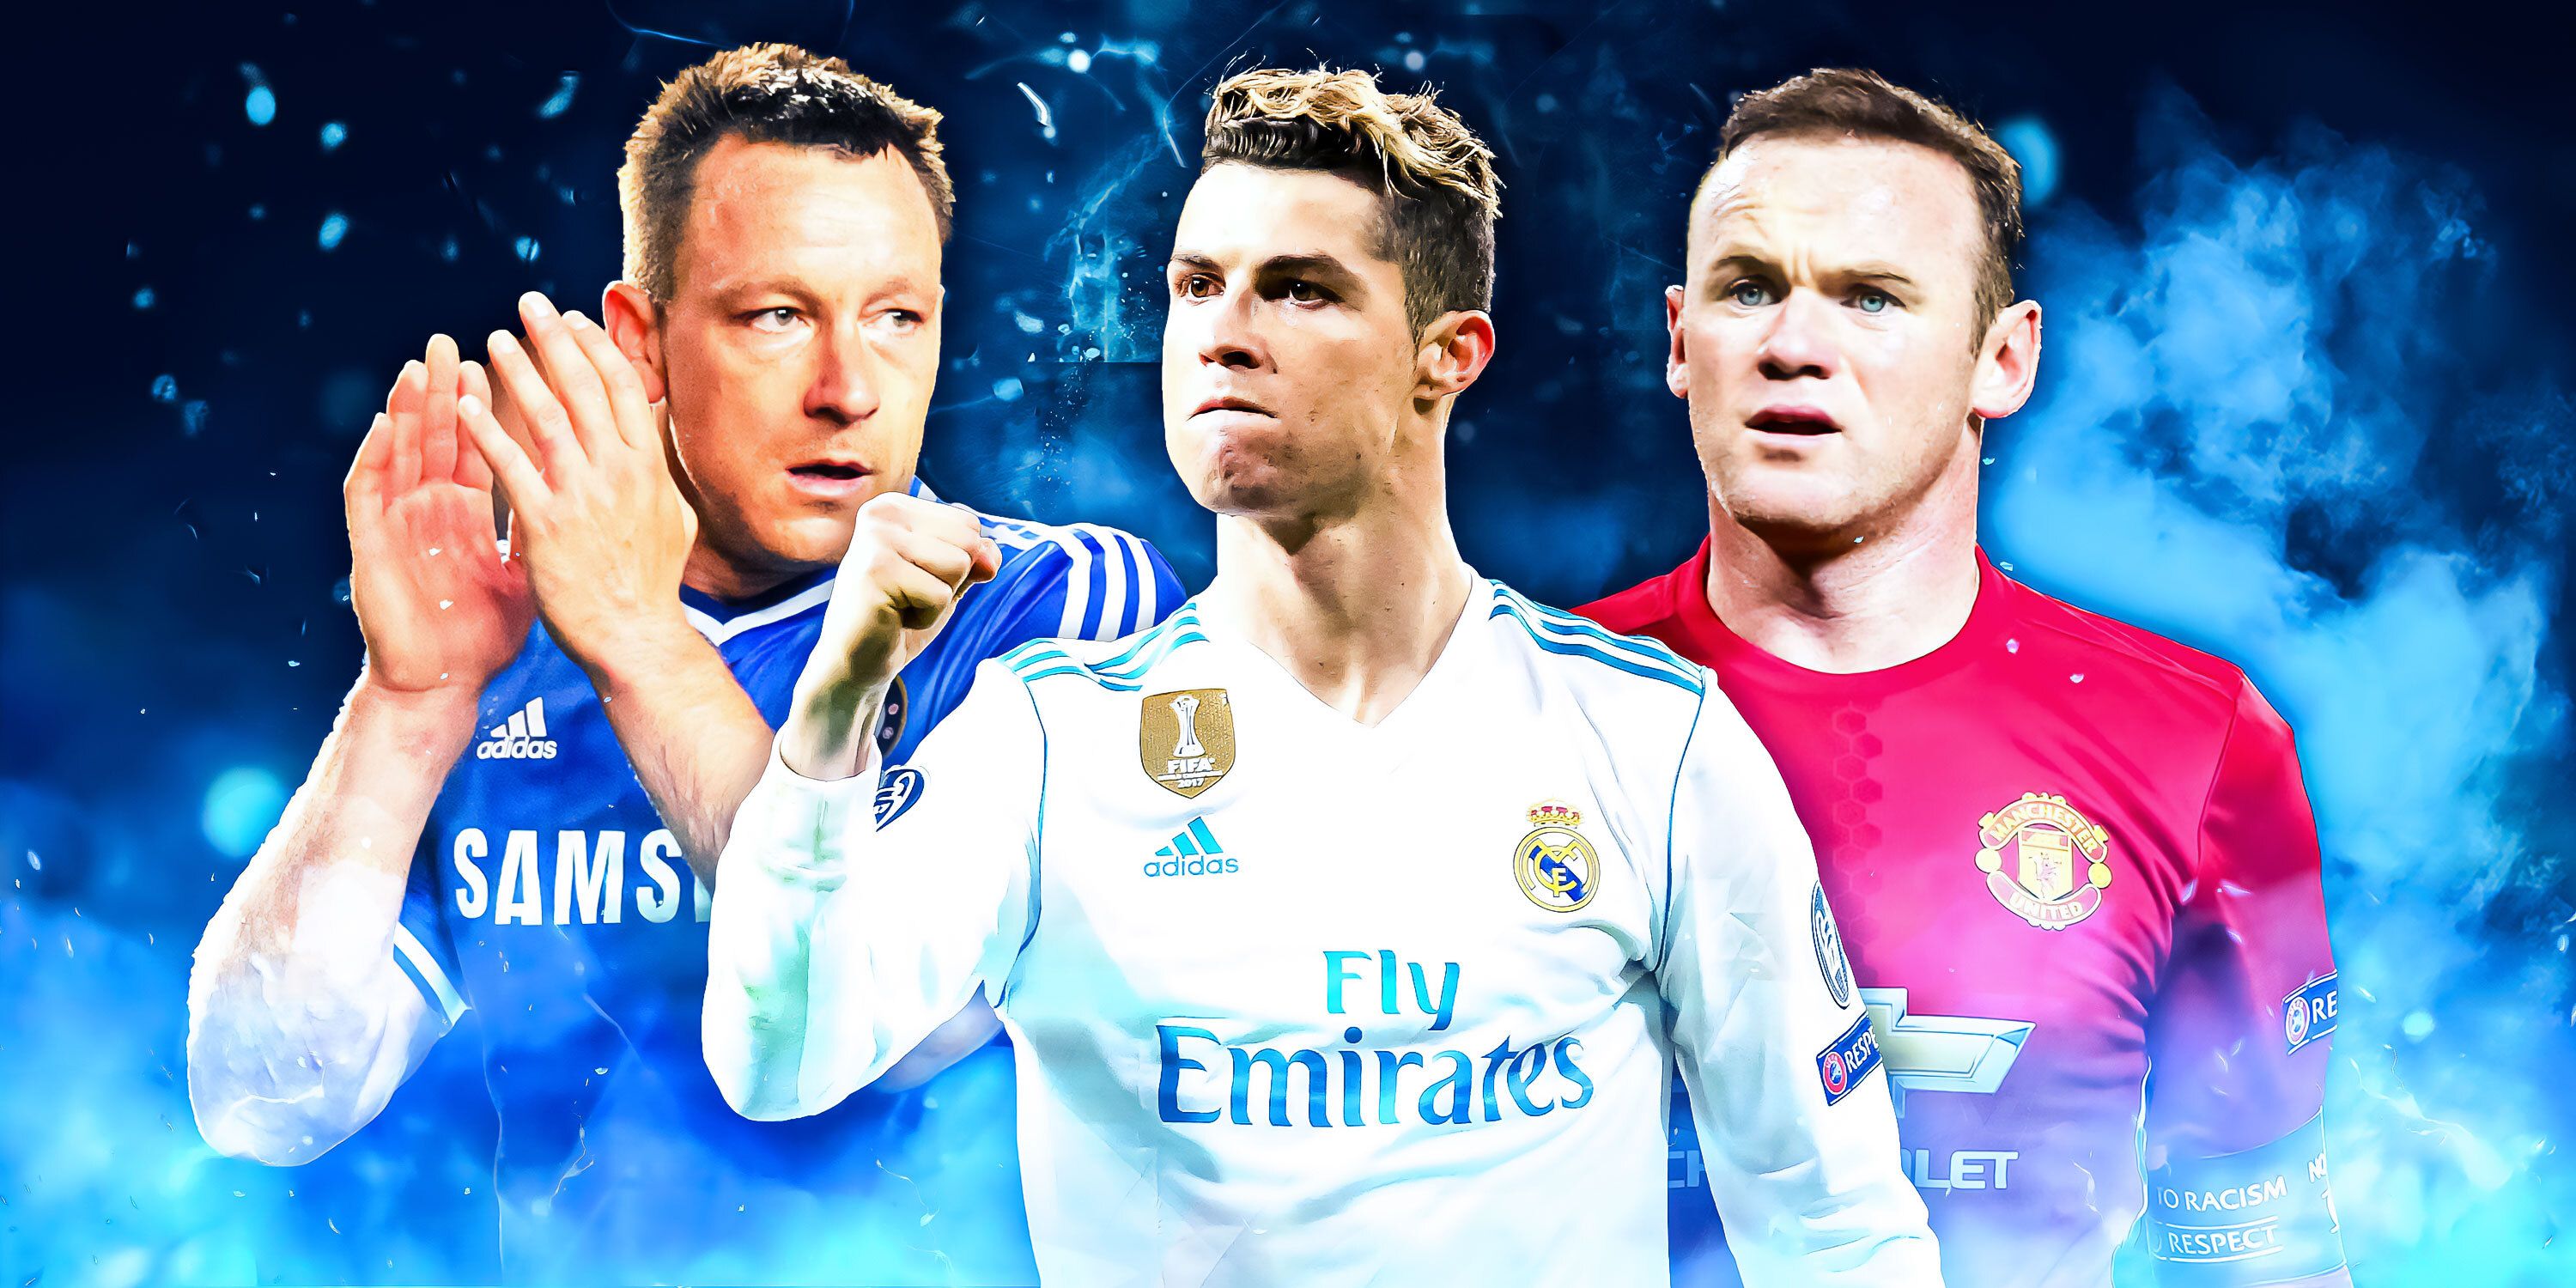 Cristiano Ronaldo (Real Madrid), Wayne Rooney (Man Utd) and John Terry (Chelsea) looking sad/annoyed